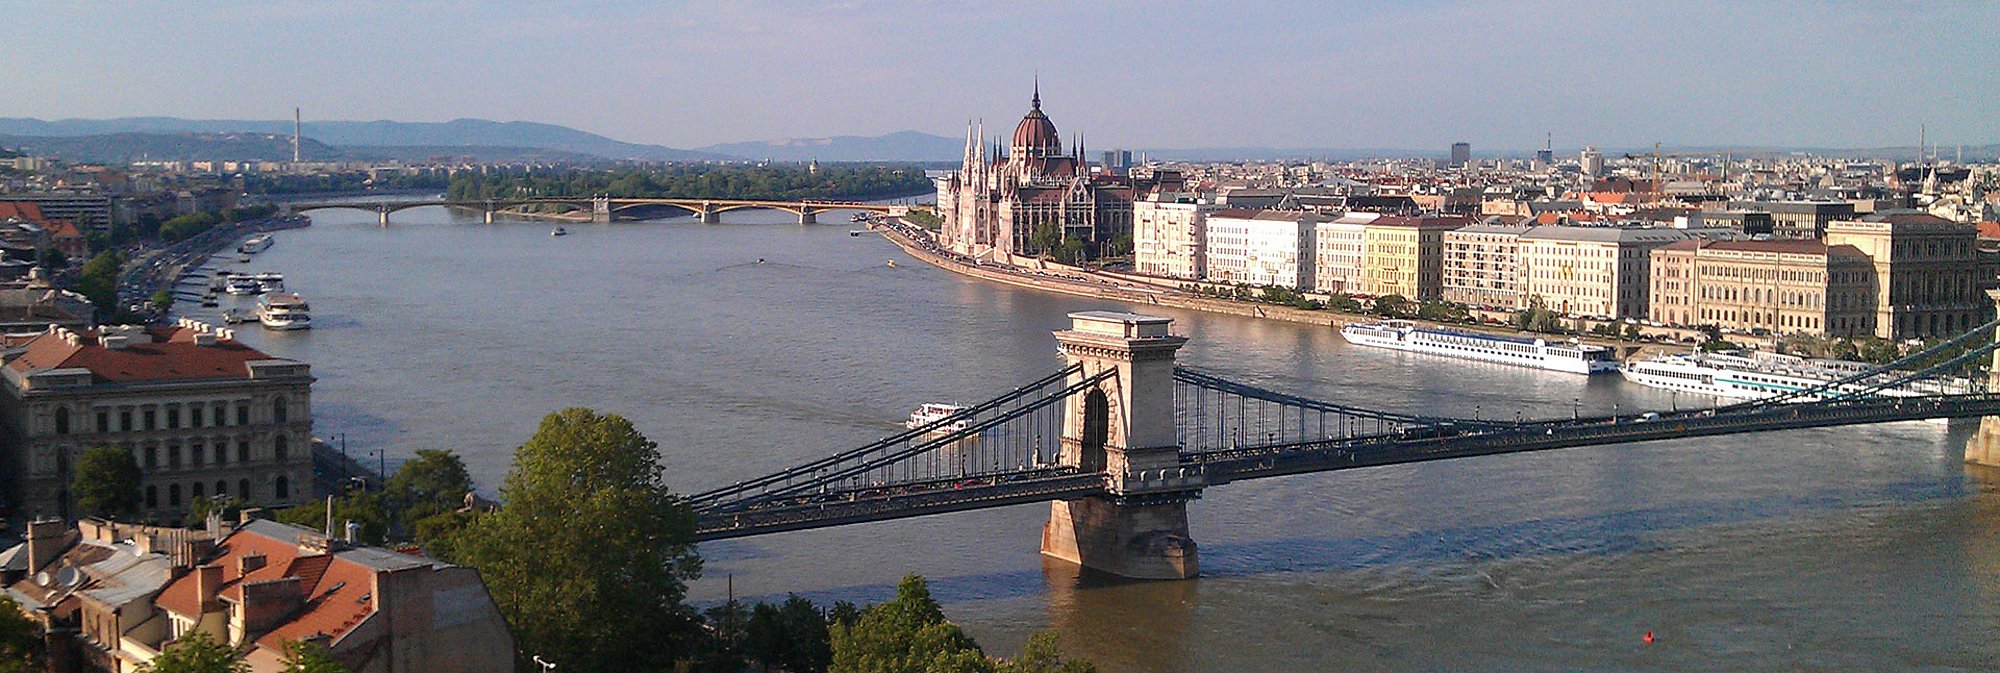 Budapest Panorama 2012